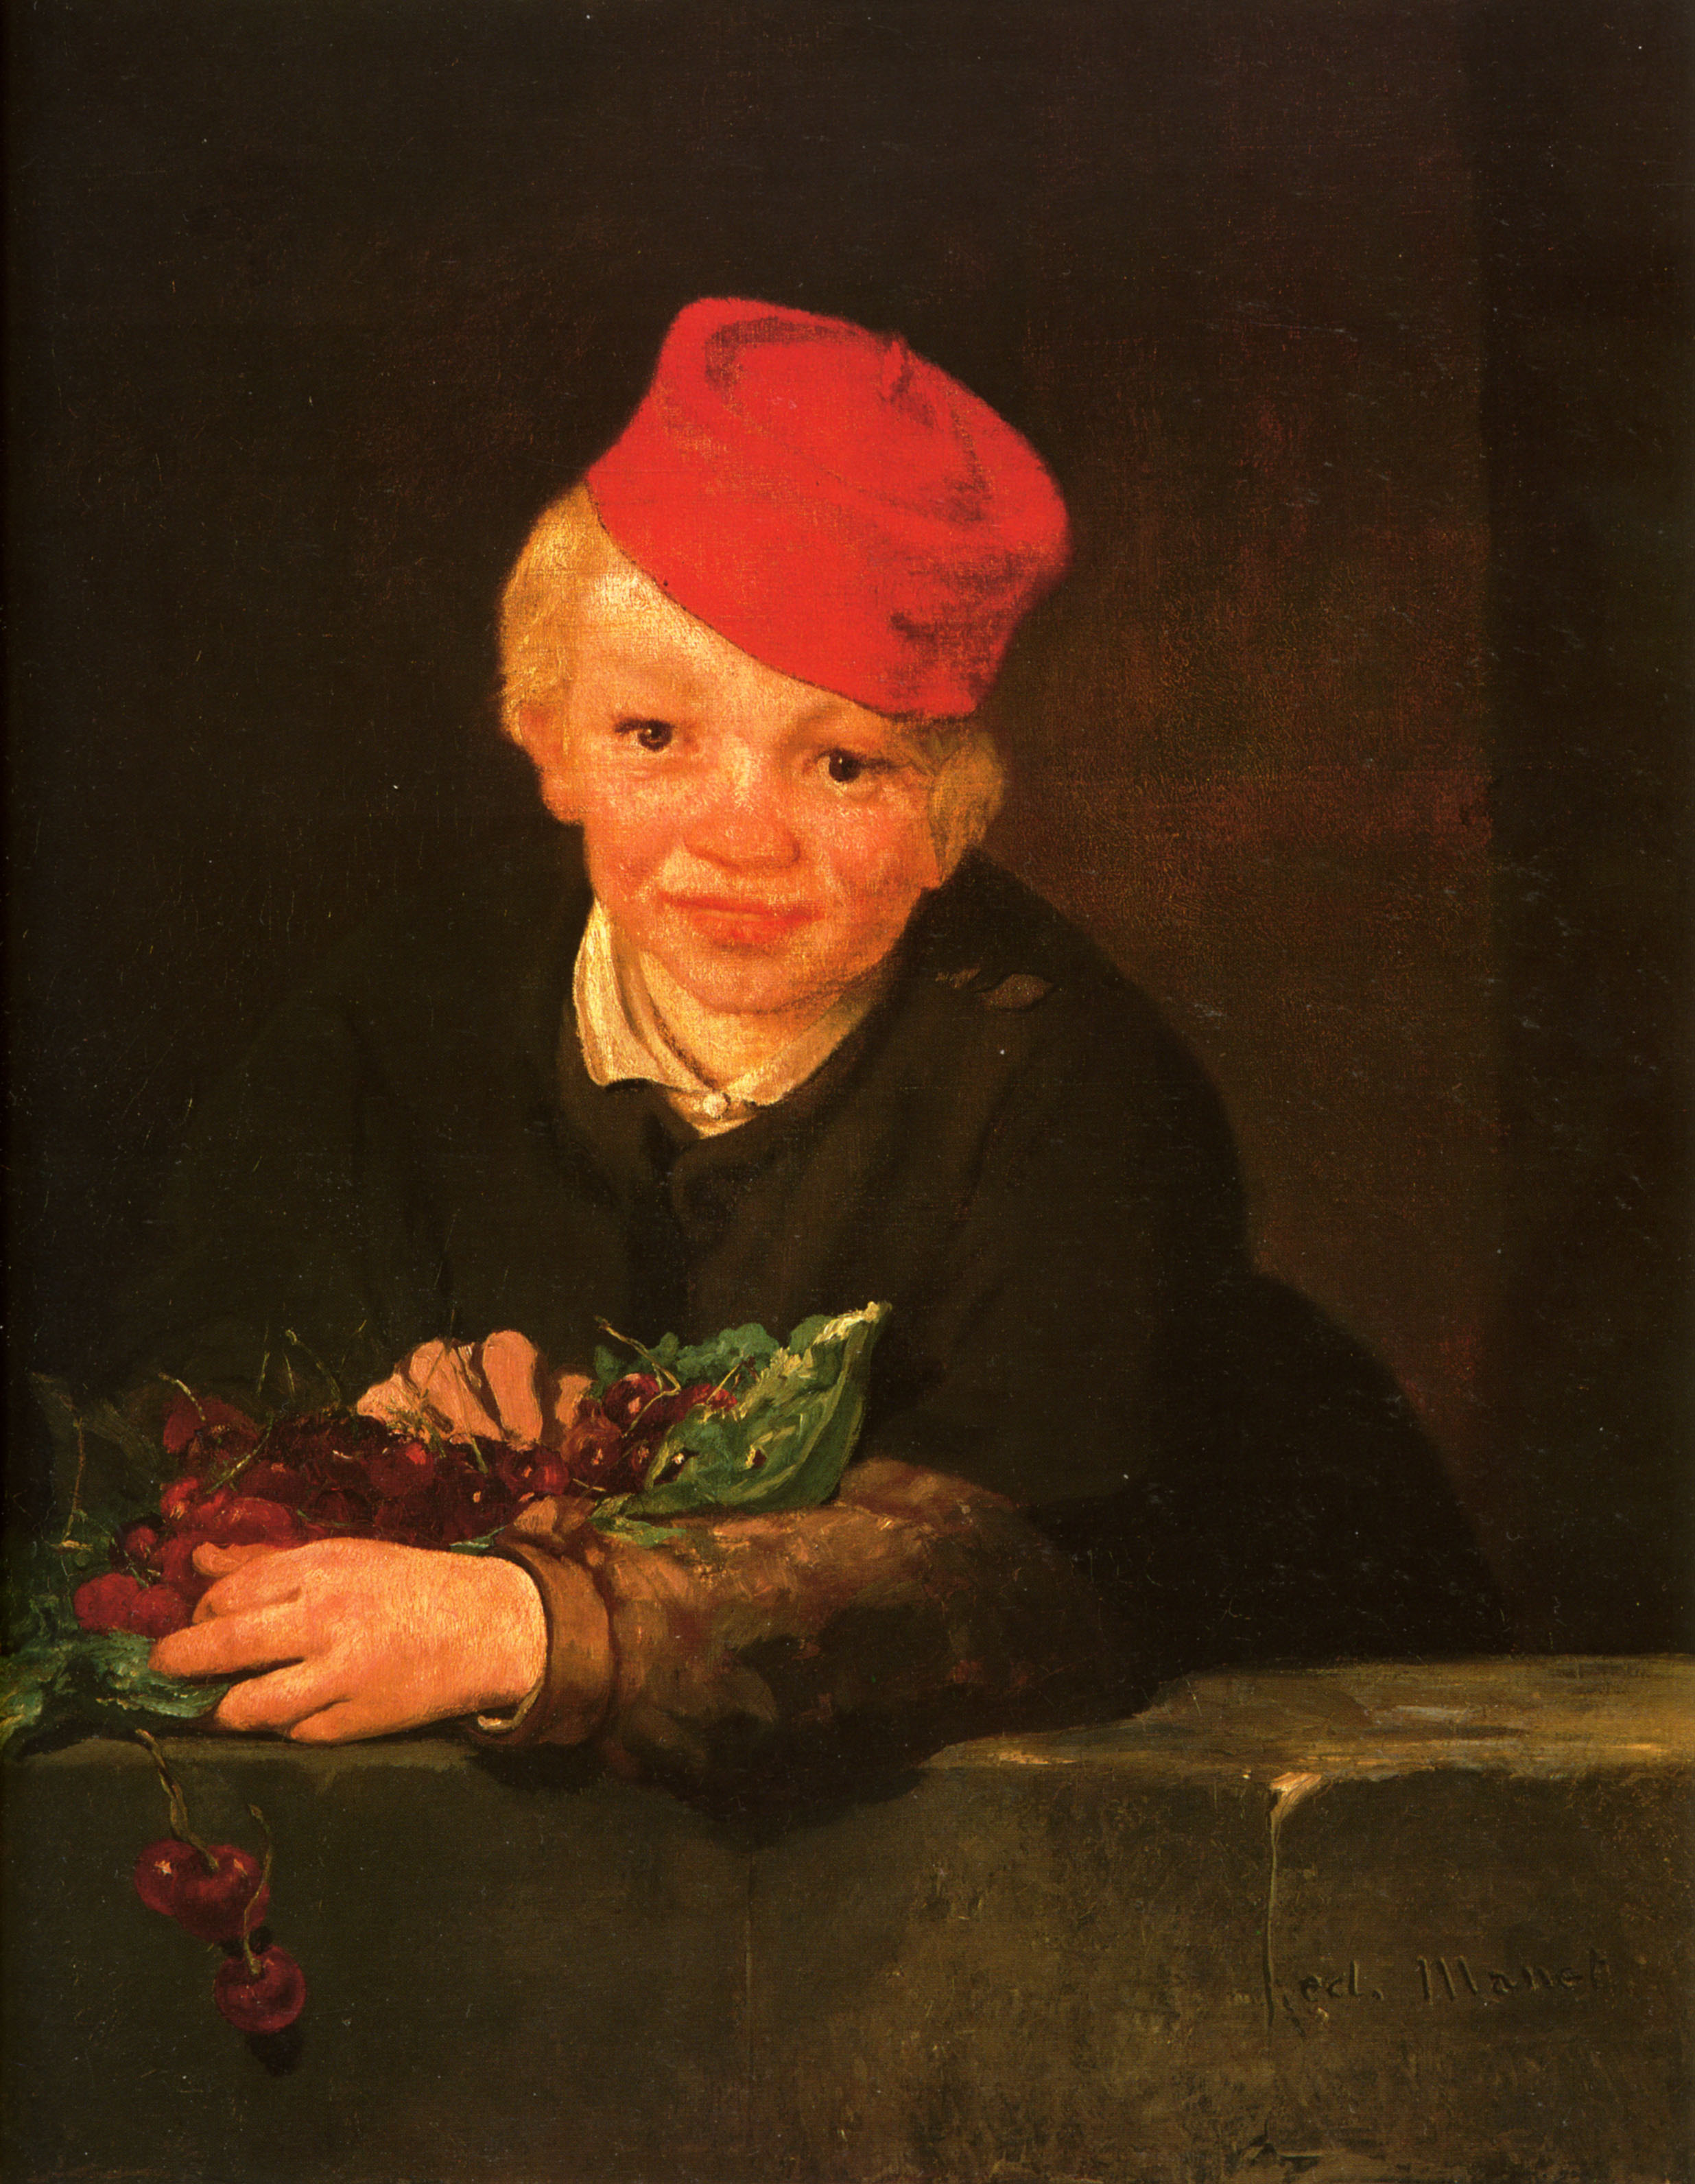 Эдуард Мане. "Мальчик с вишнями". 1859.